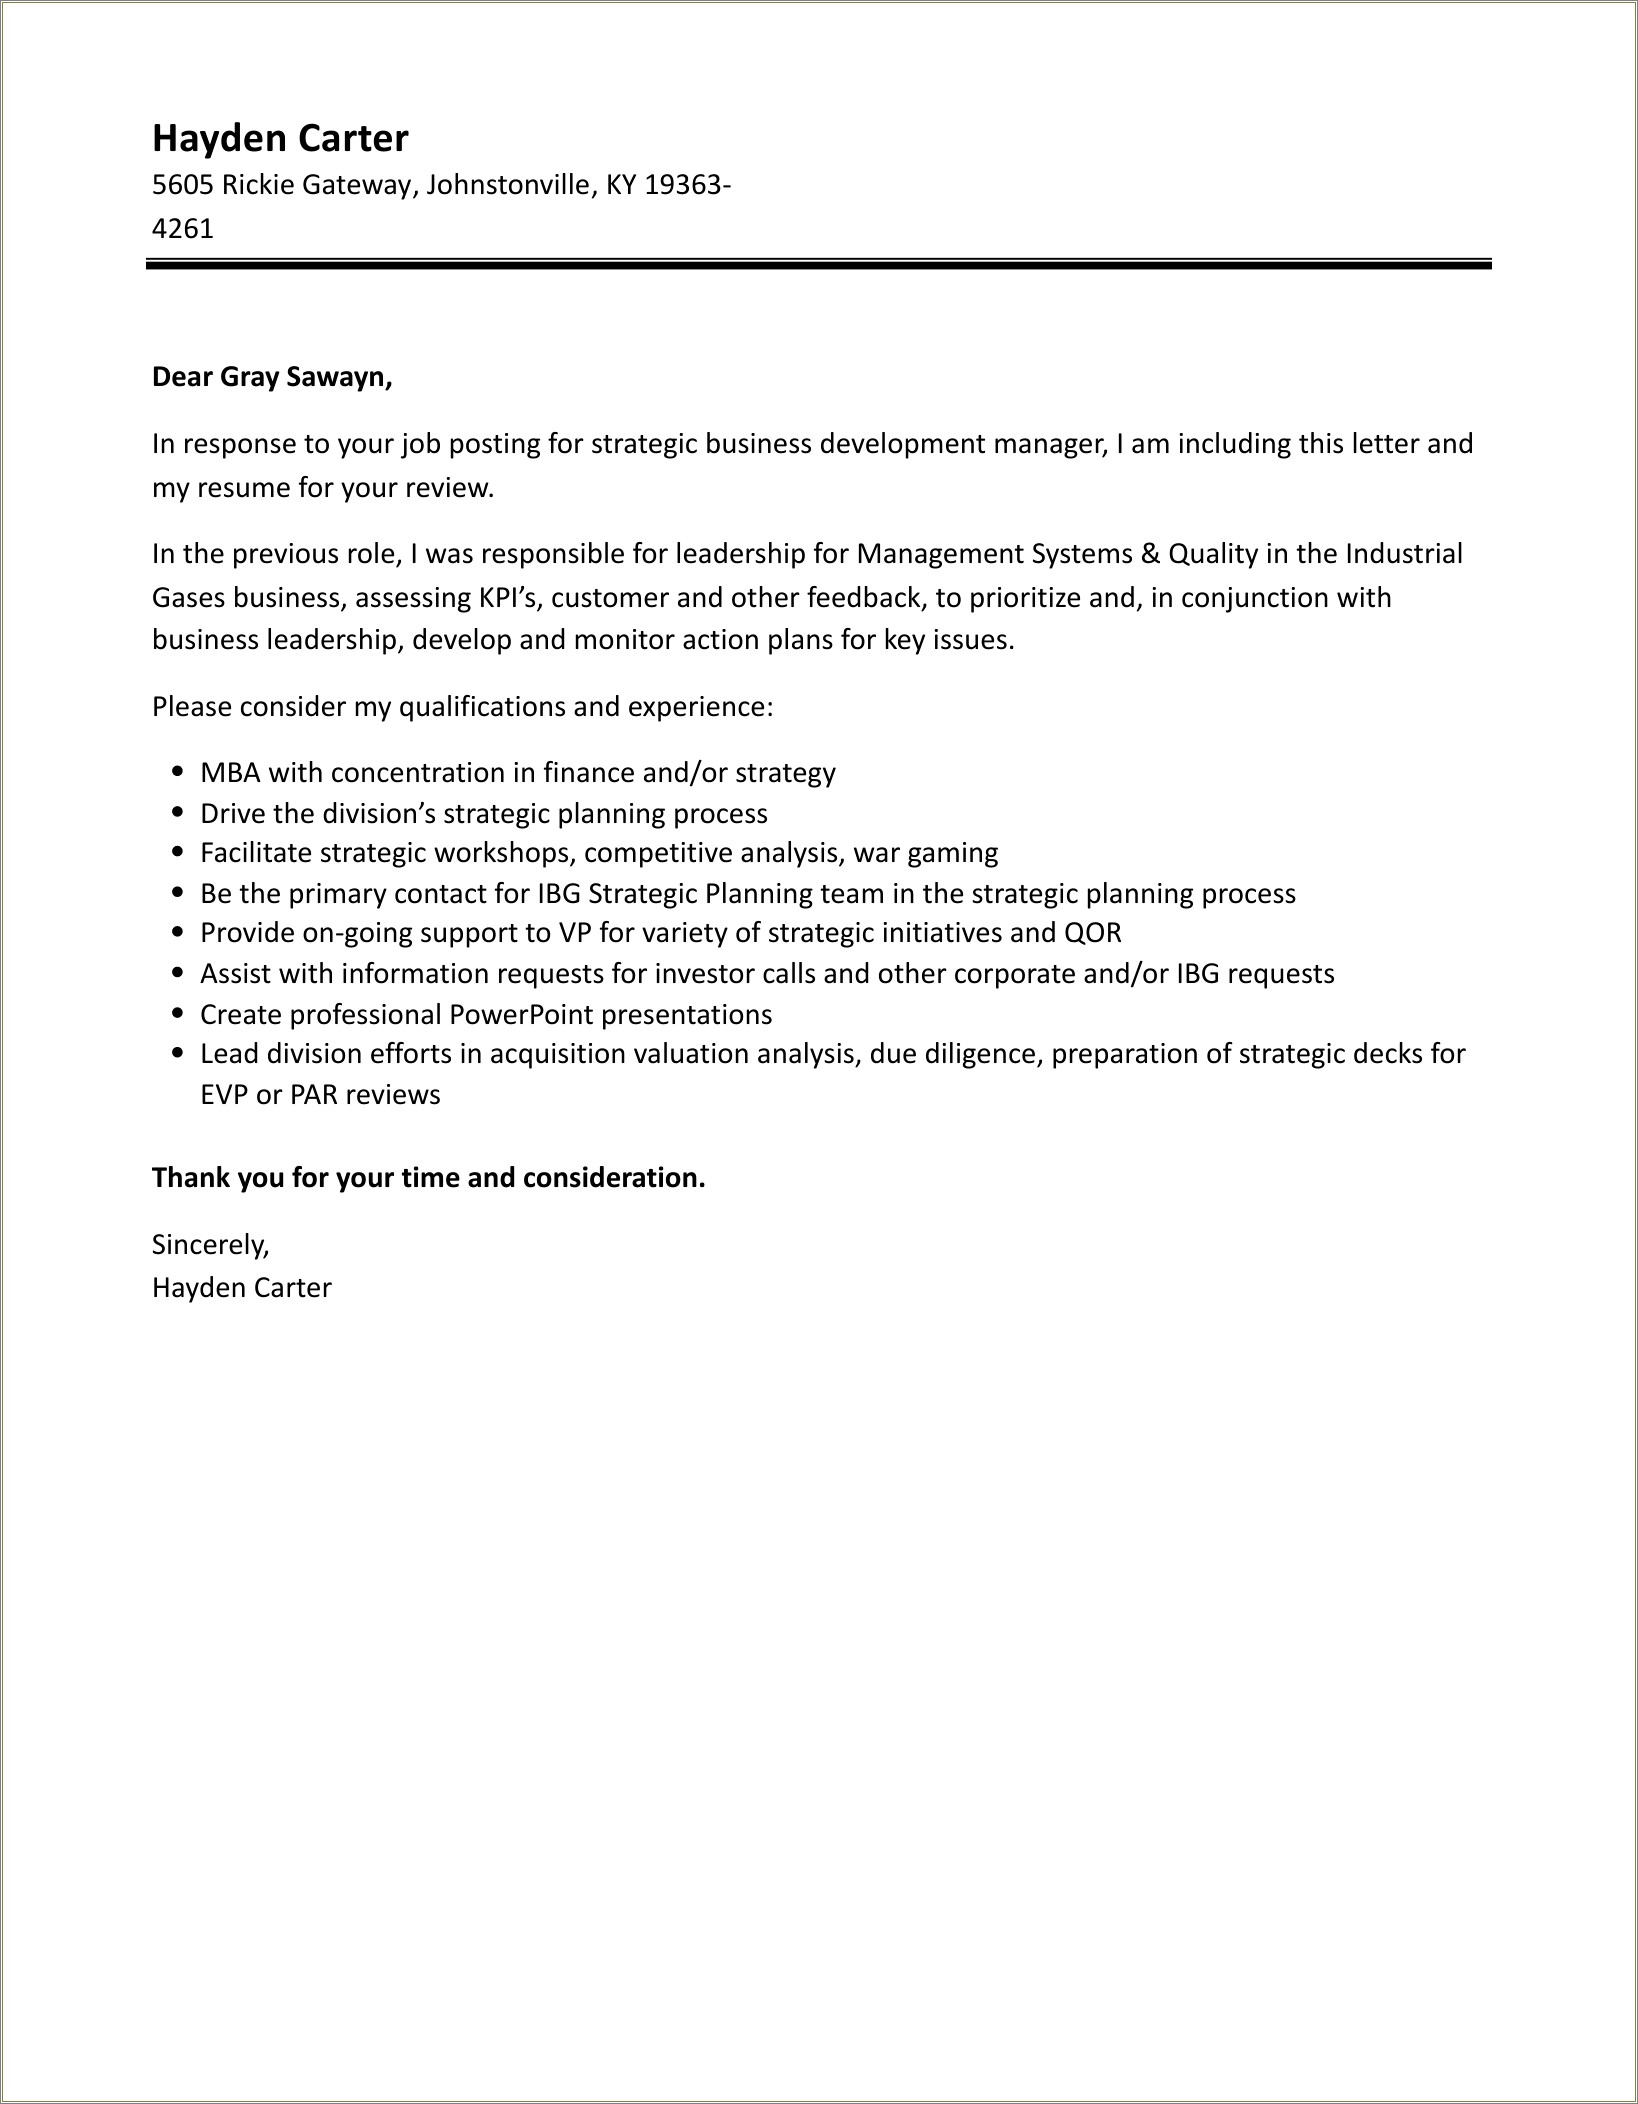 Business Development Manager Resume Cover Letter